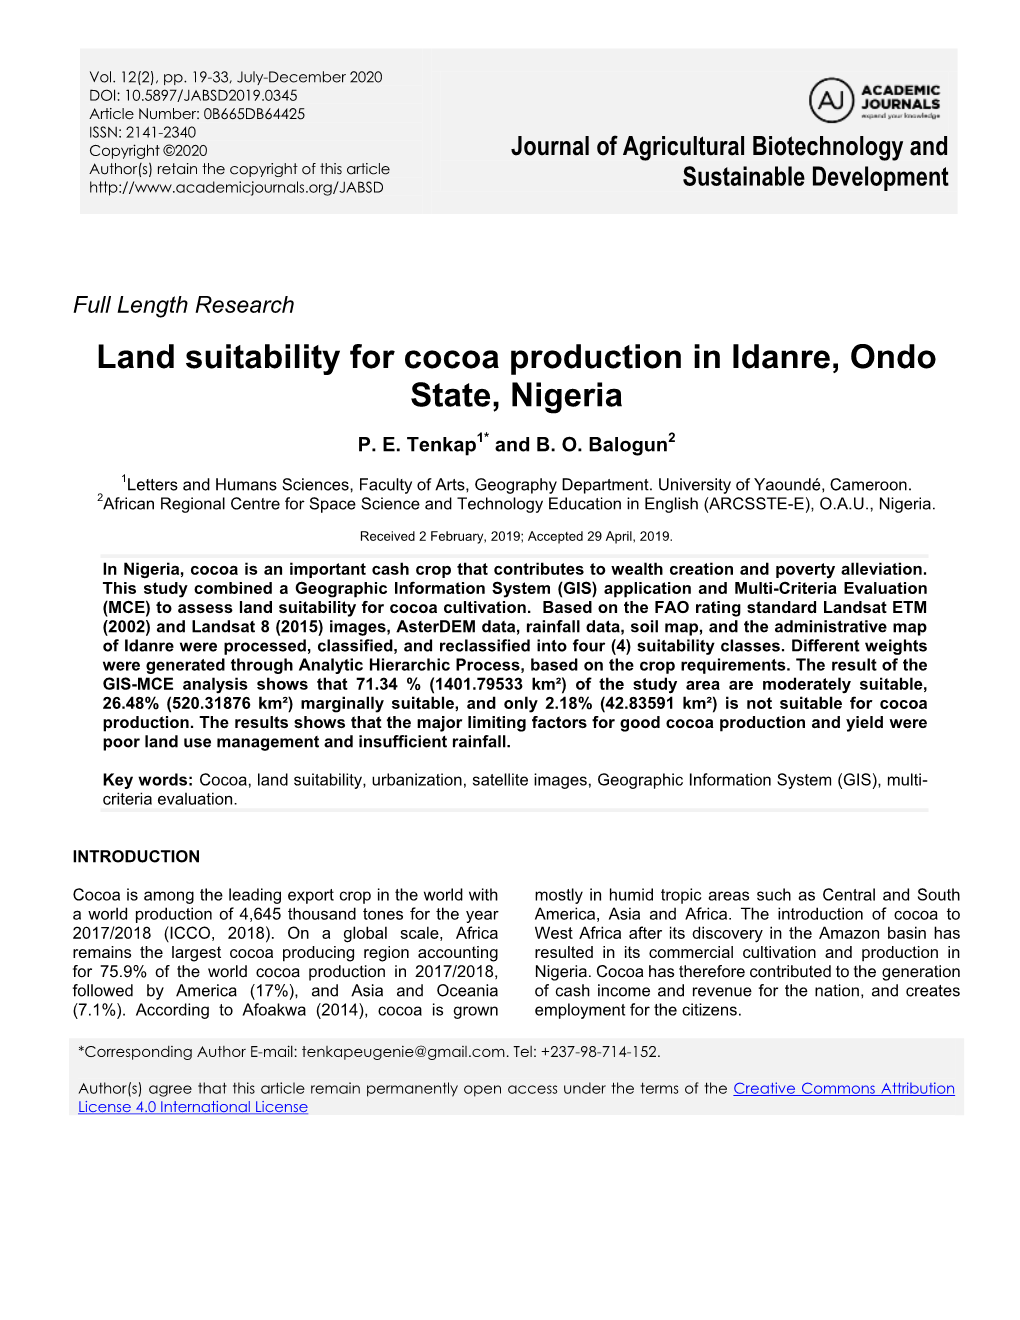 Land Suitability for Cocoa Production in Idanre, Ondo State, Nigeria